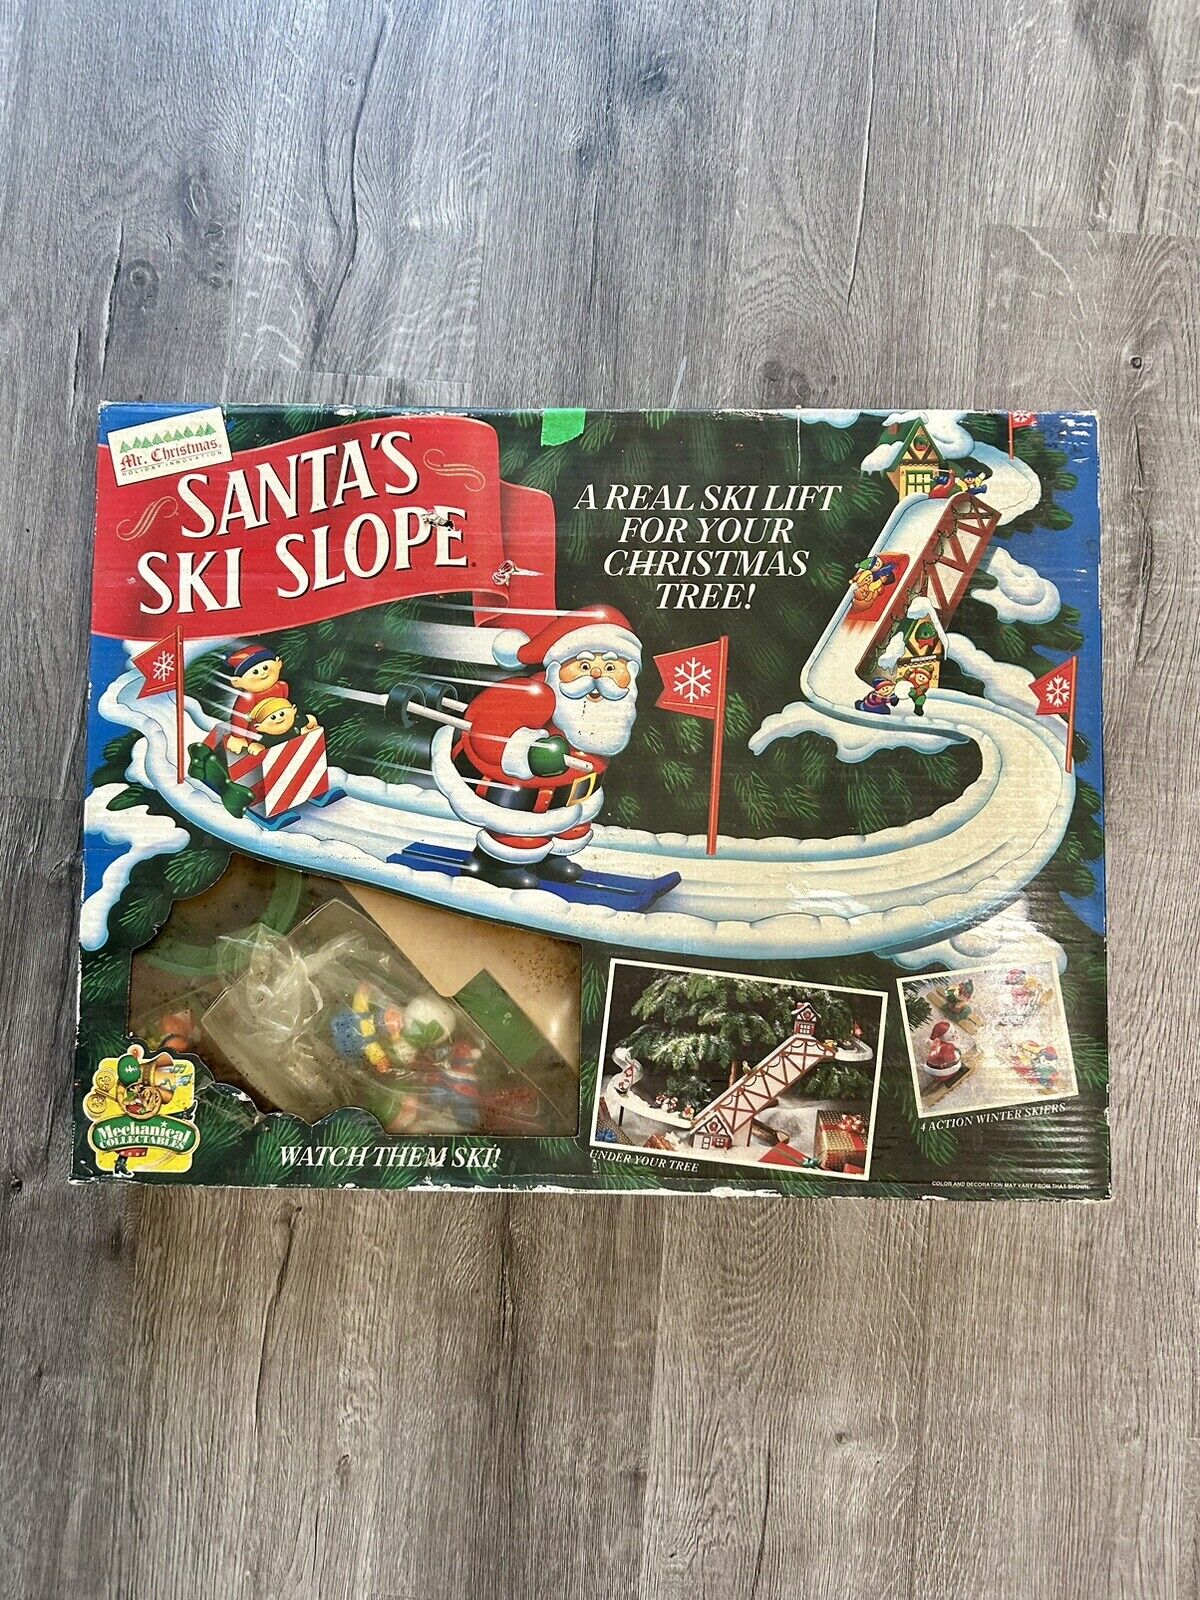 Vintage Mr. Christmas Santa's Ski Slope In Original Box Tested Working